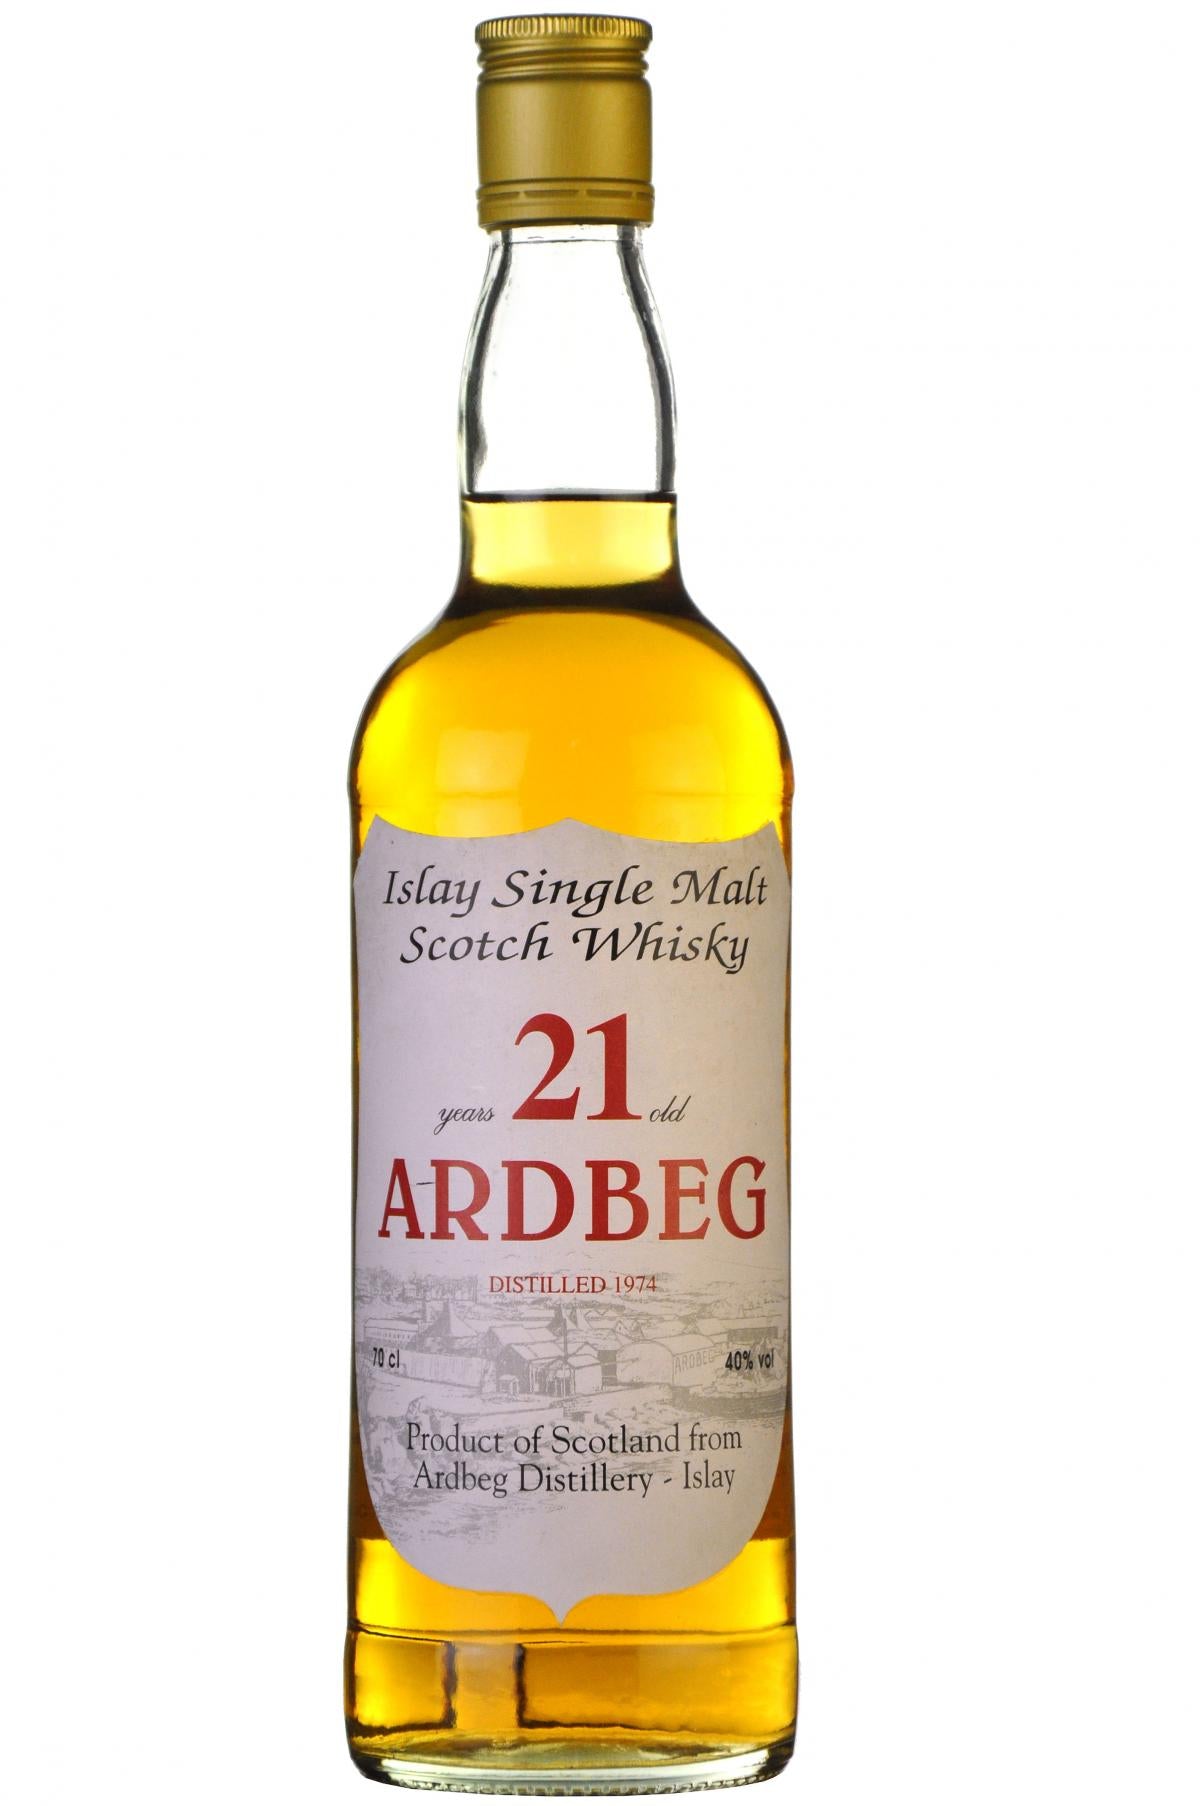 ardbeg distilled 1974, 21 year old, bottled by sestante import s.r.l islay single malt scotch whisky whiskey